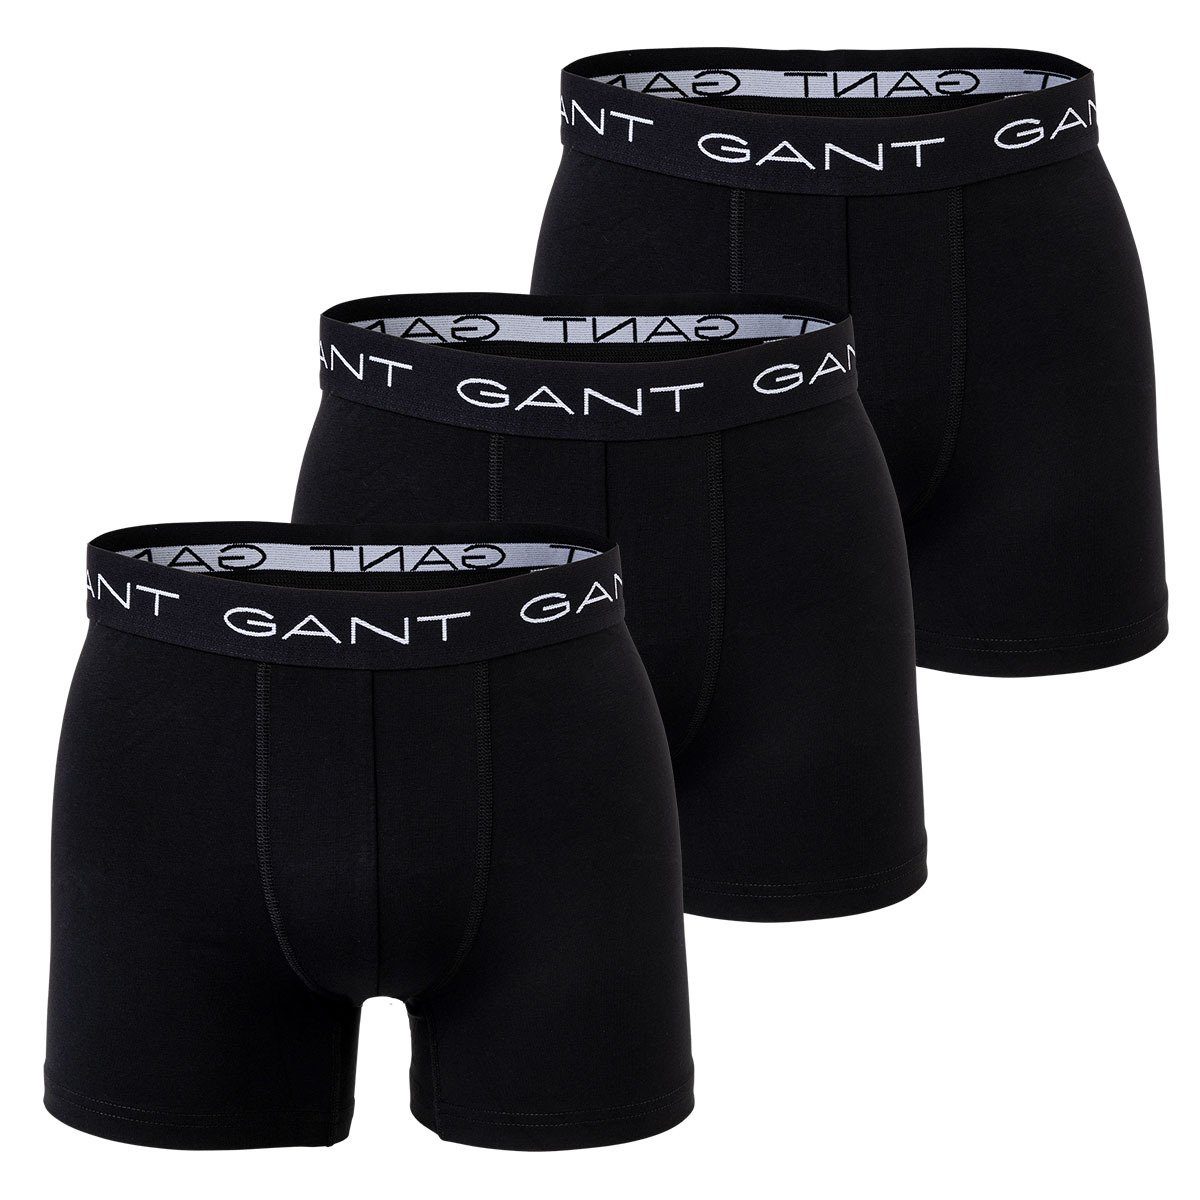 Gant Boxer Herren Boxer Schwarz 3er - Shorts, Boxer Pack Briefs